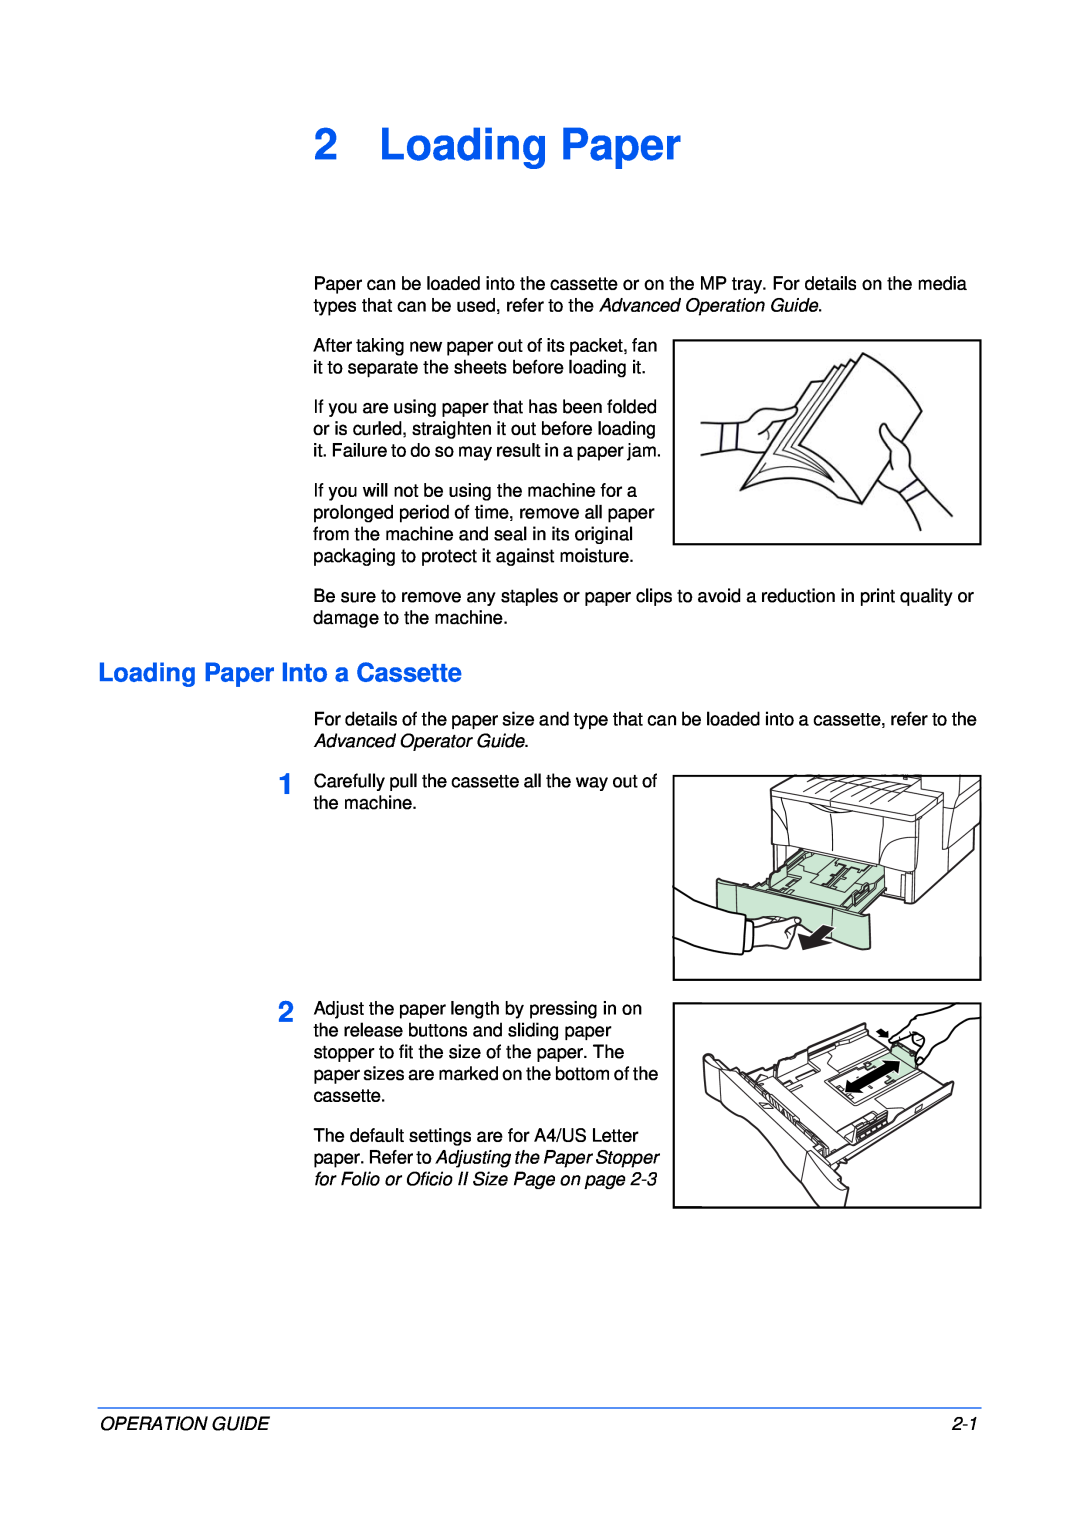 Olivetti 18MF manual Loading Paper Into a Cassette 